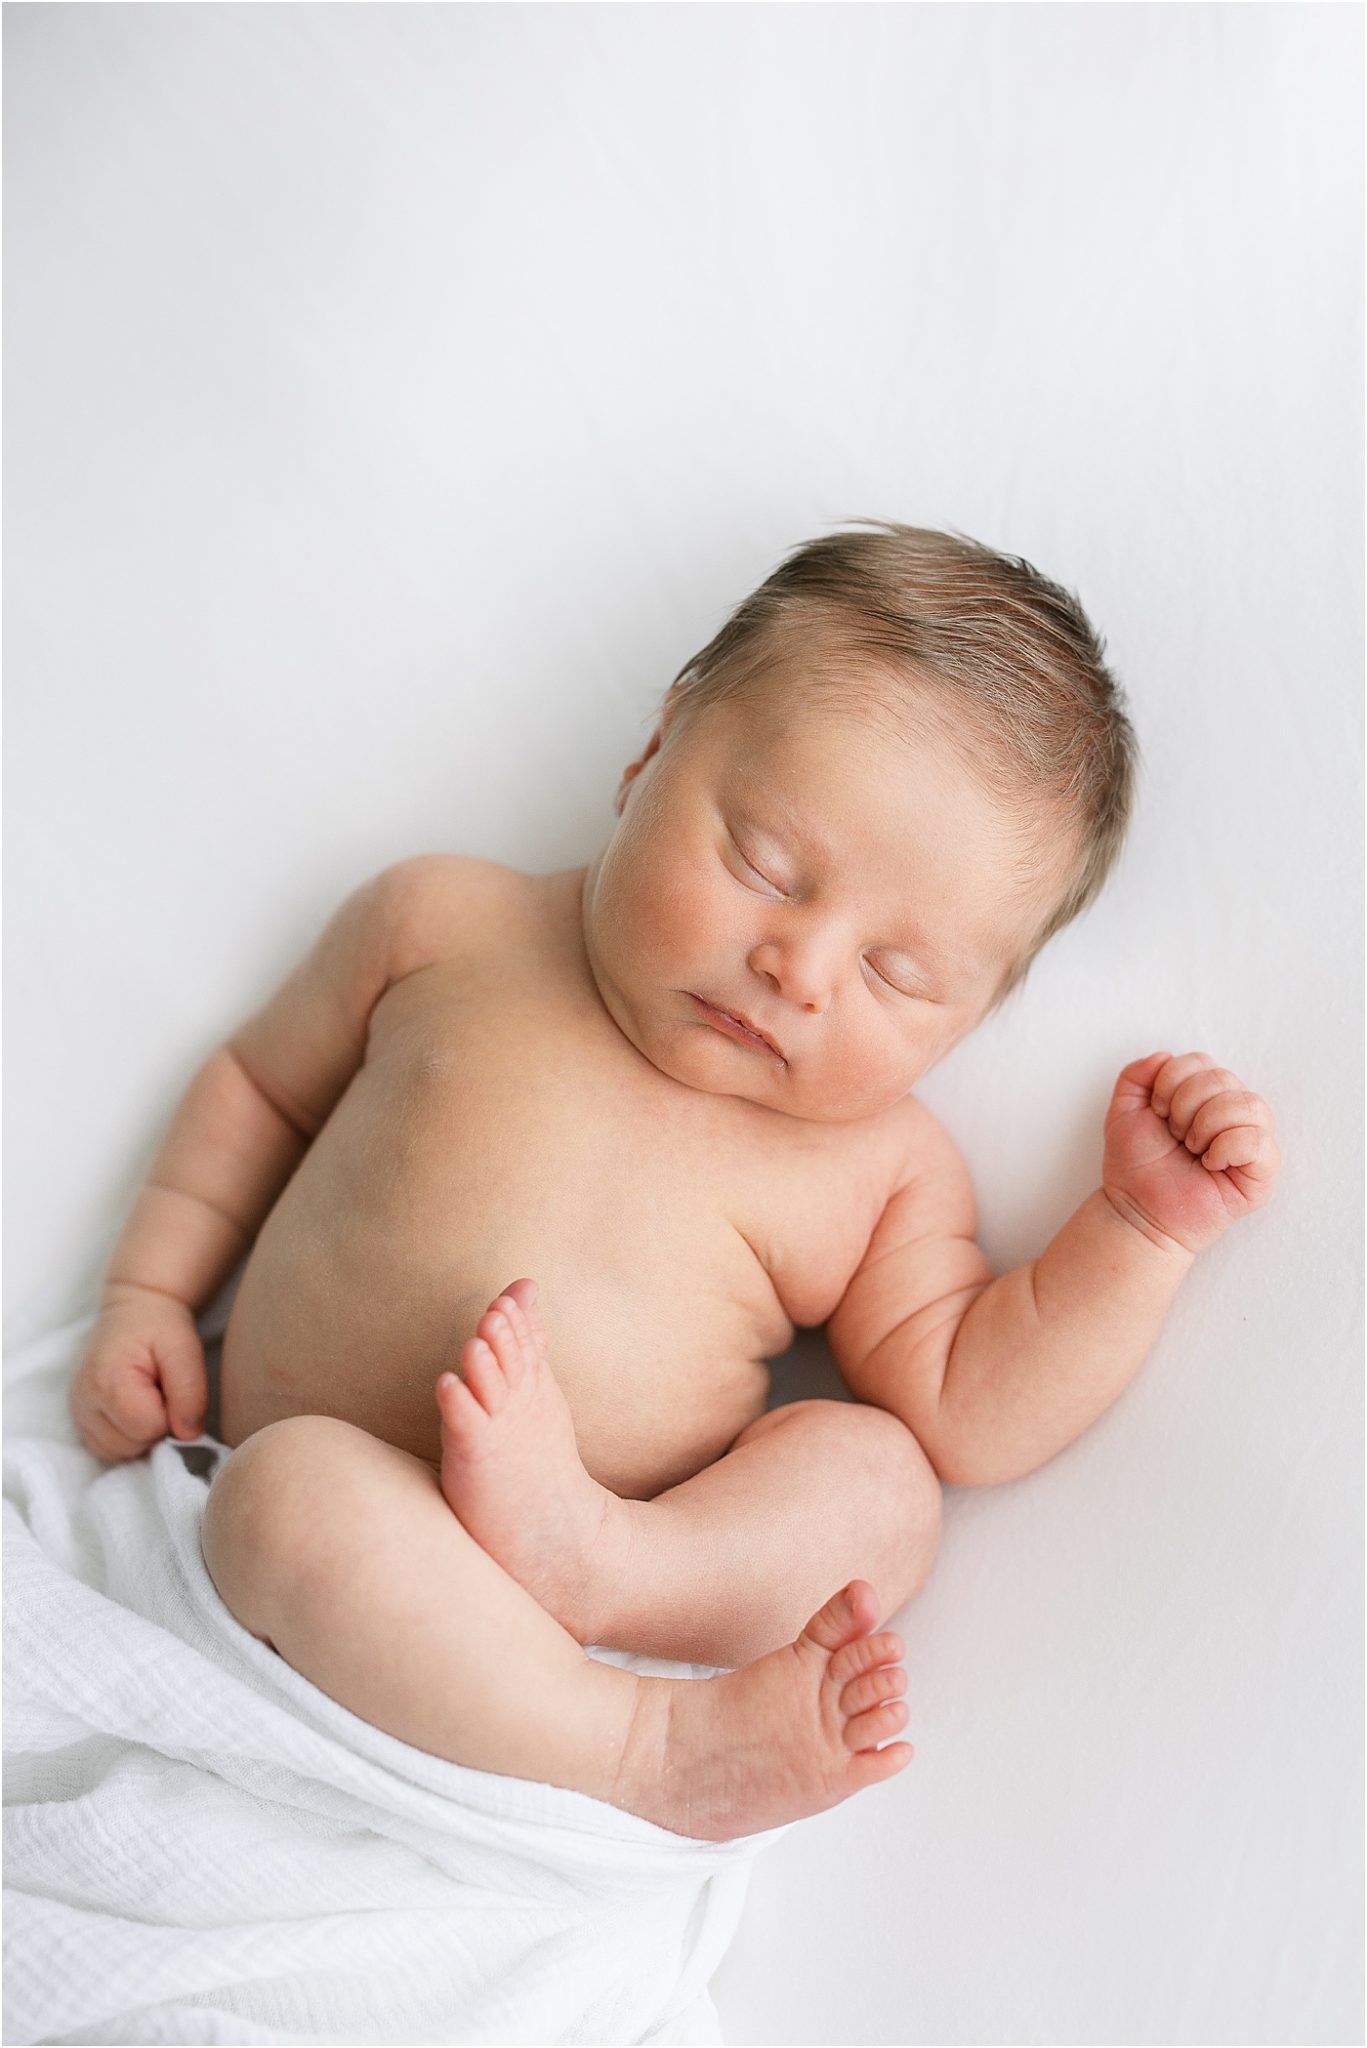 Baby boy sleeping during newborn session. Photo by Lindsay Konopa Photography.